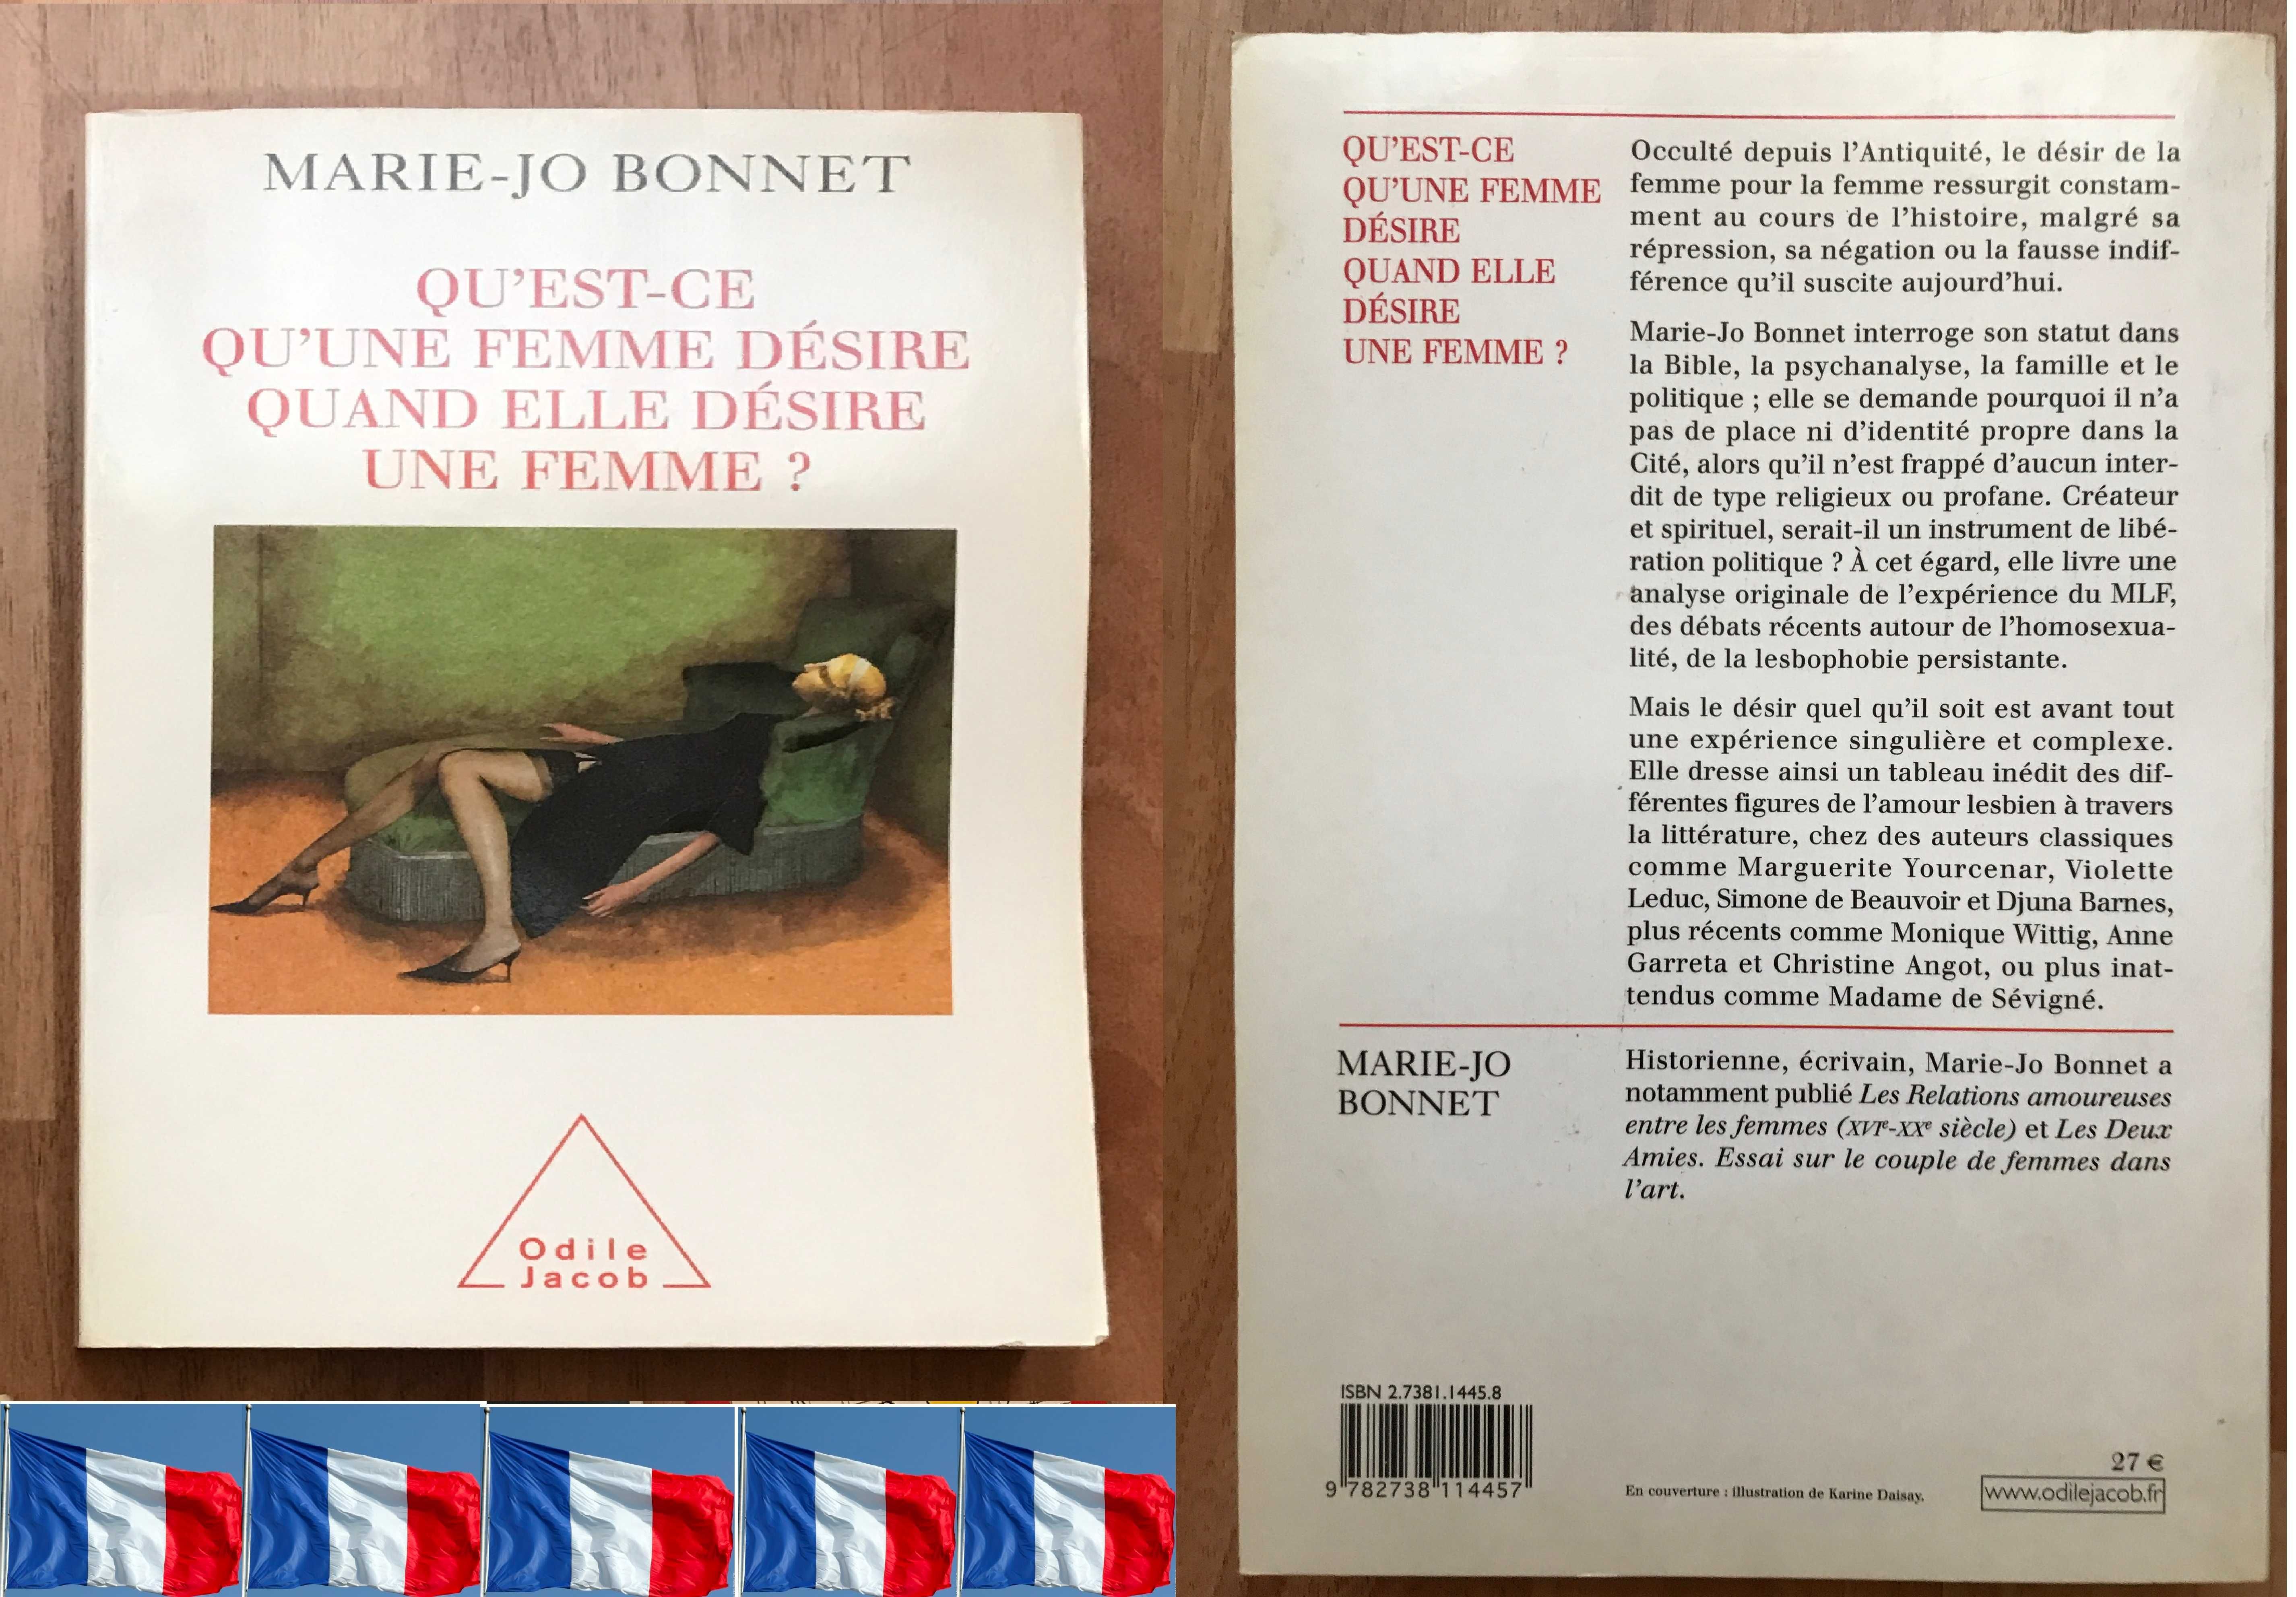 Учебници Помагала по Френски език Panorama, Bernard Pivot Подарък